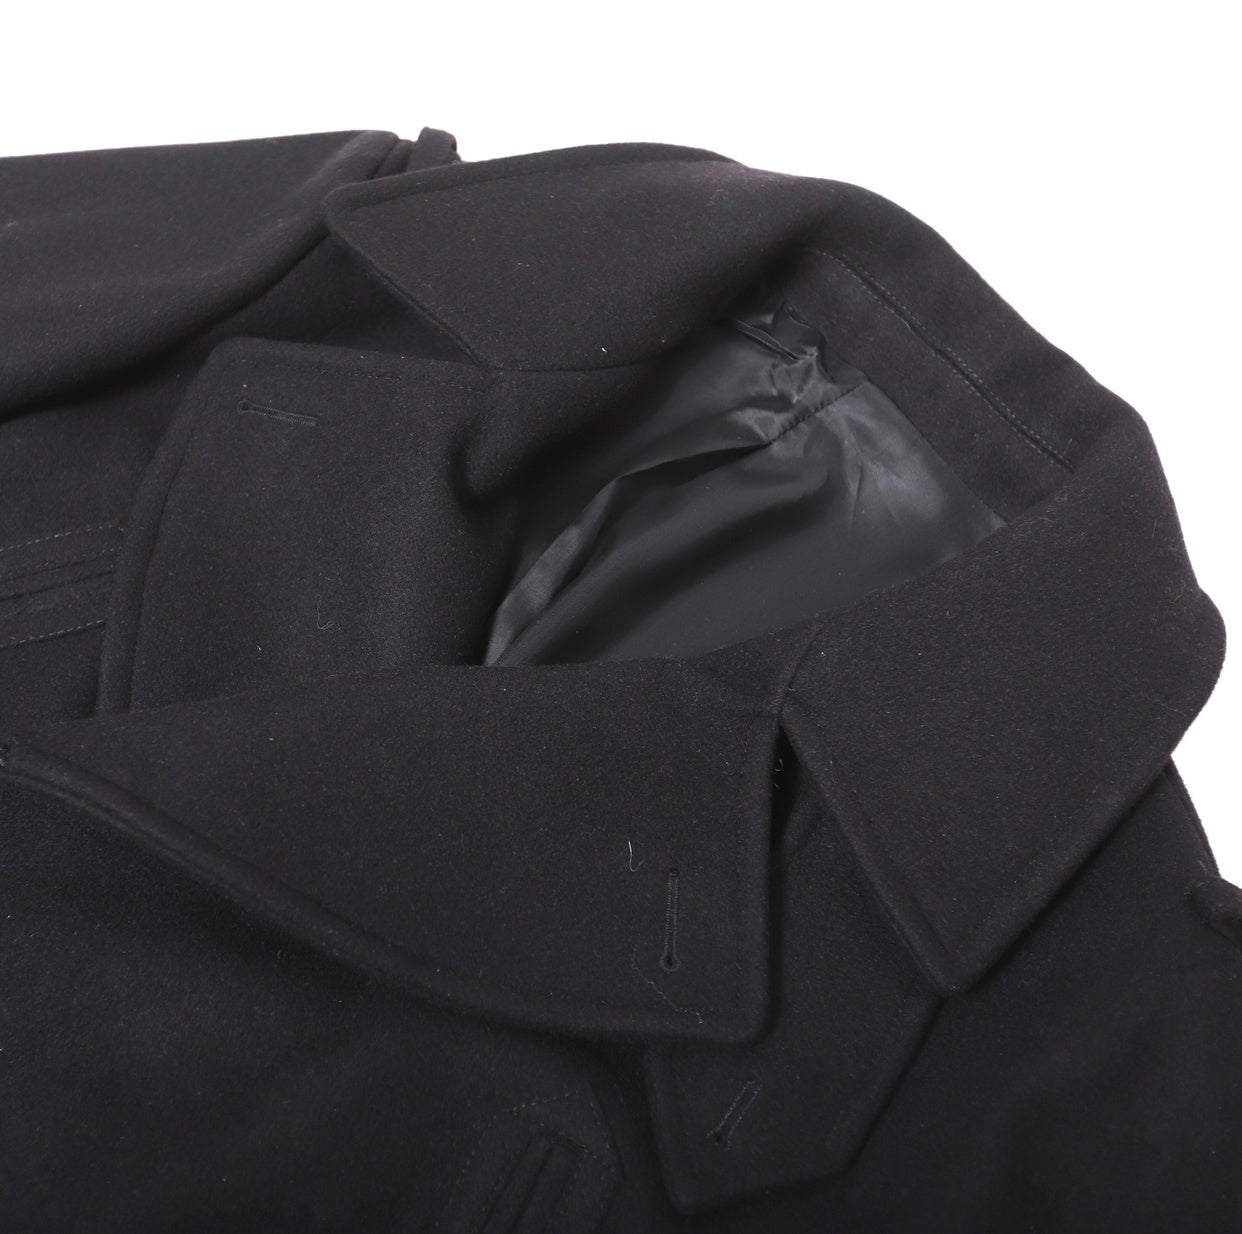 Berluti by Haider Ackermann FW17 Black Mega Coat Prototype